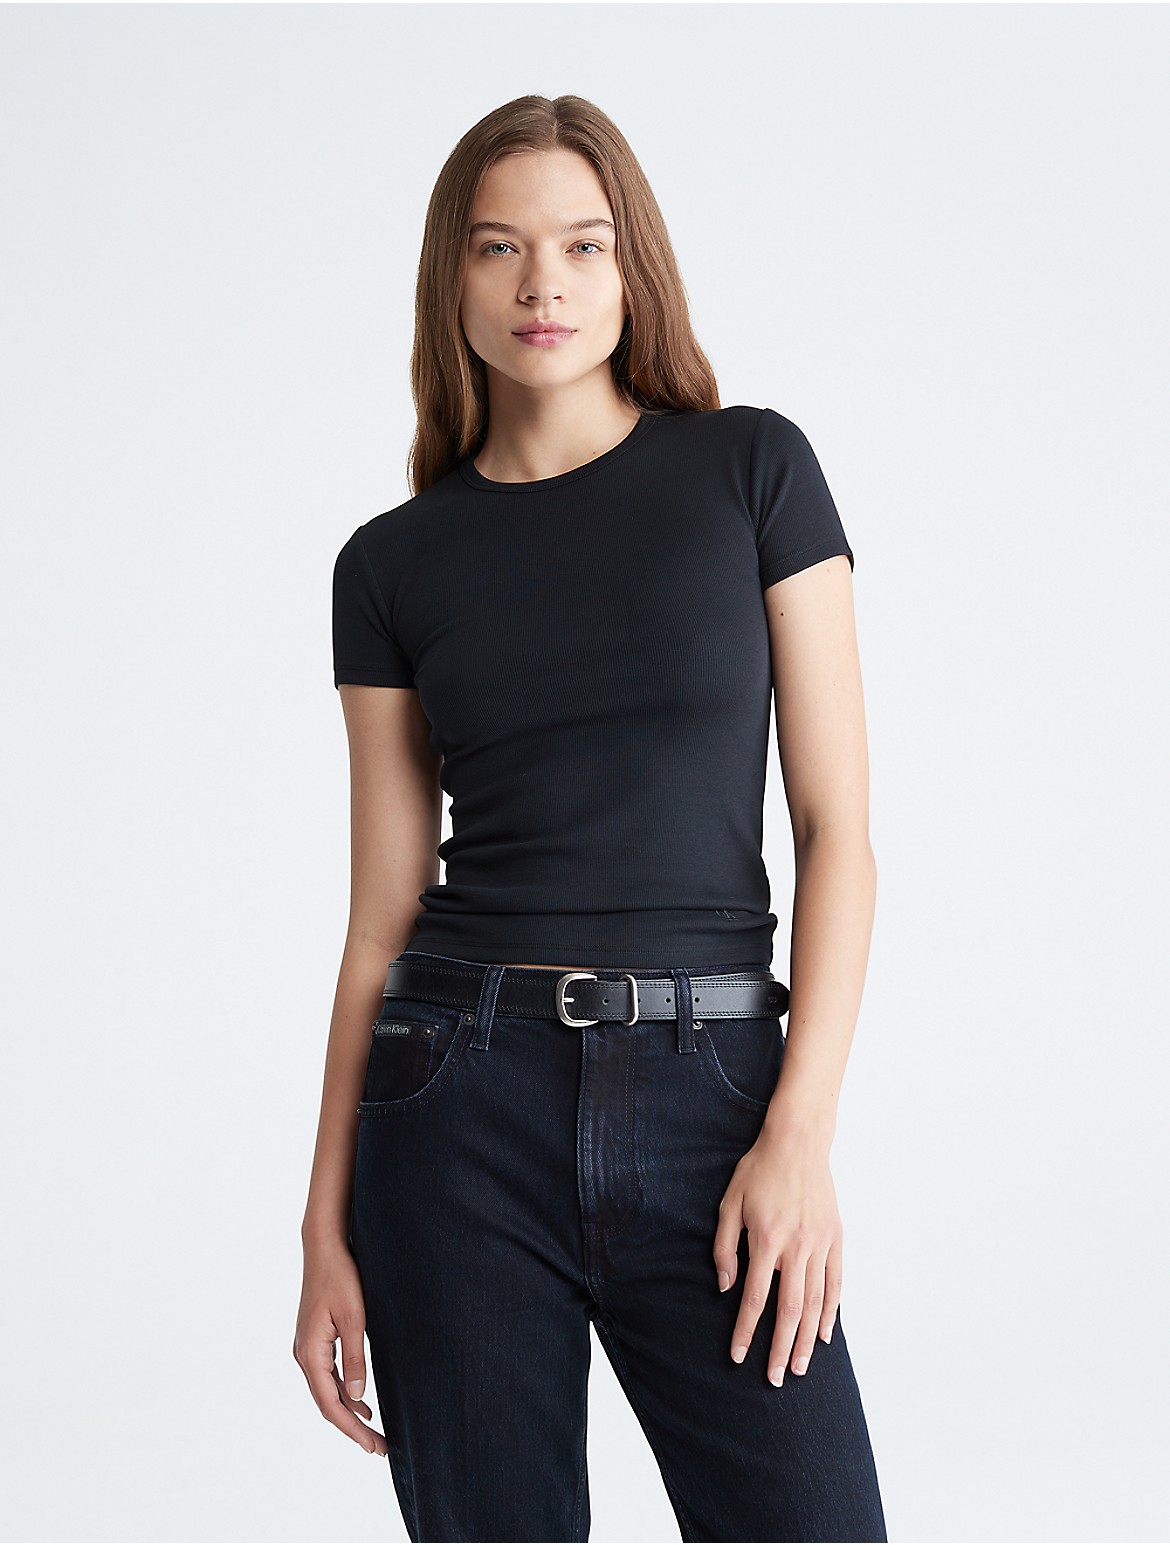 Calvin Klein Women's Contour Rib Slim Fit T-Shirt - Black - XS